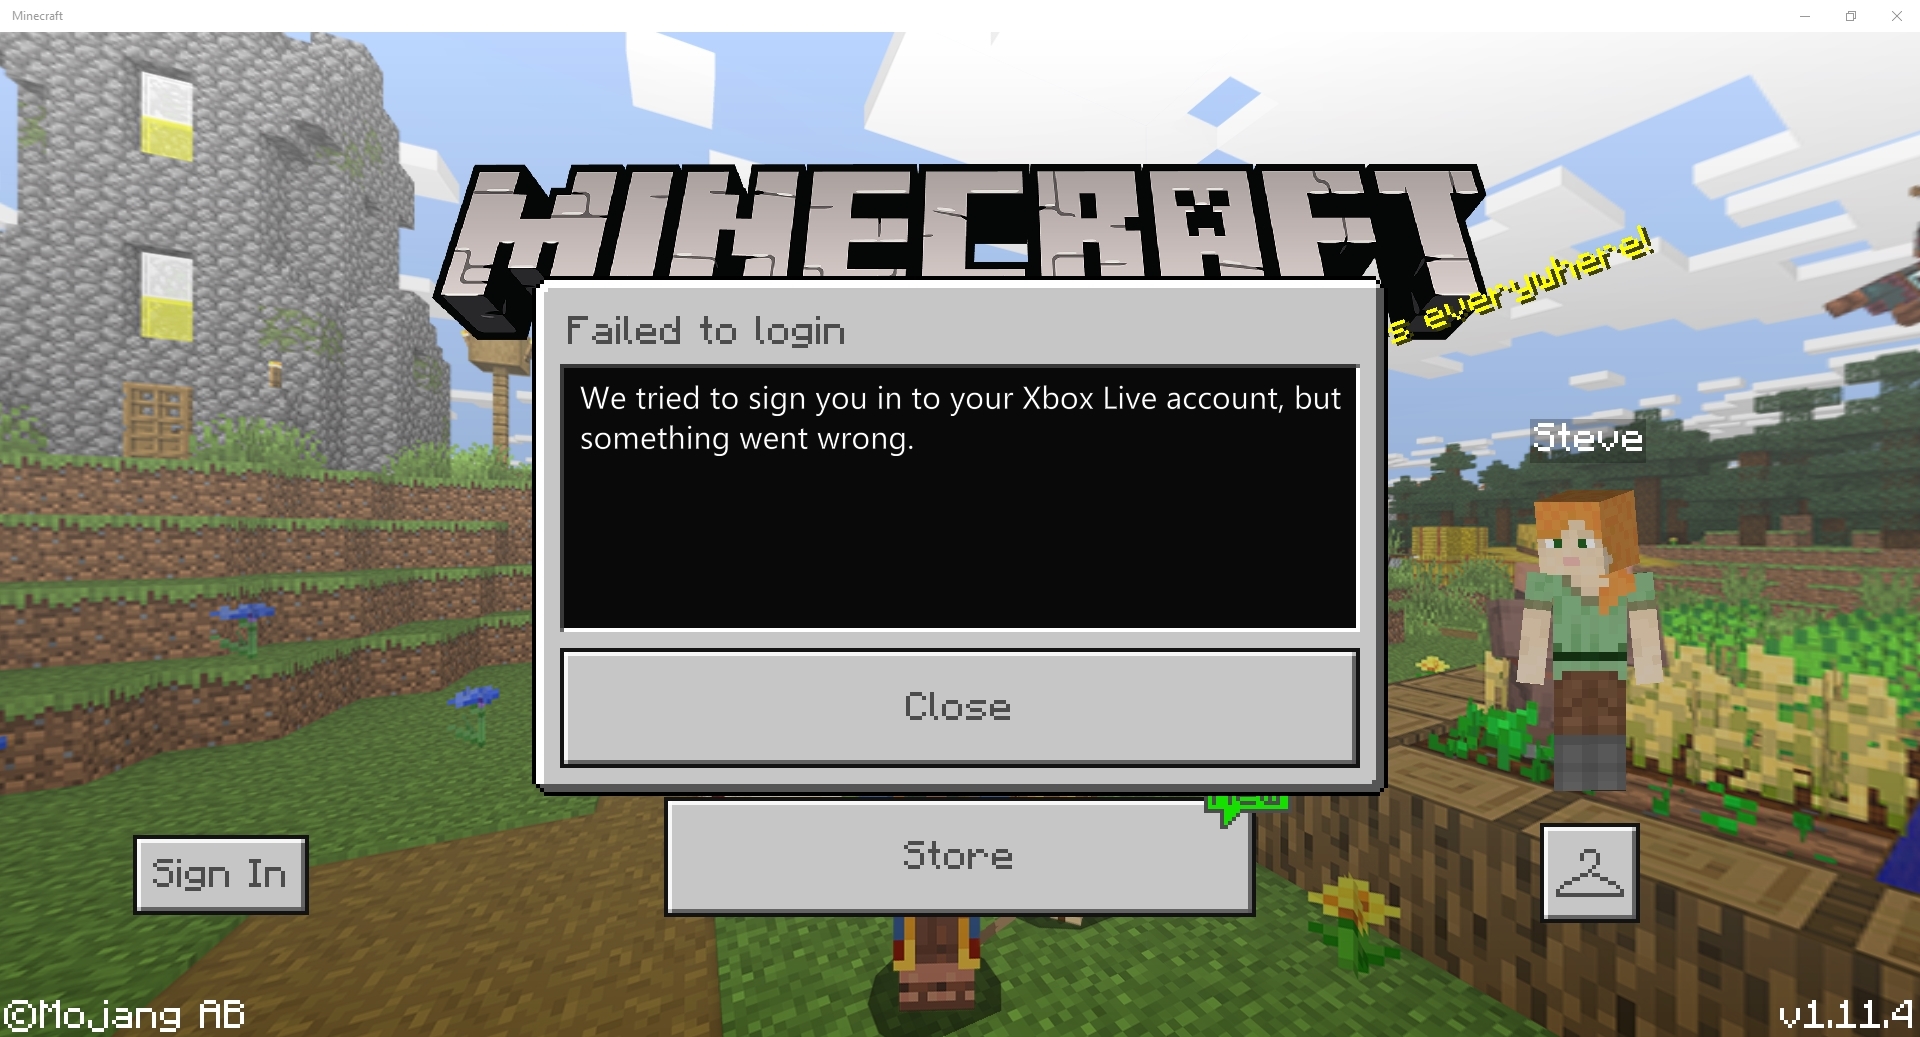 Can't login to xbox account throught minecraft windows 10 d542226d-13e2-4a18-876a-0eb7f14f65cf?upload=true.jpg